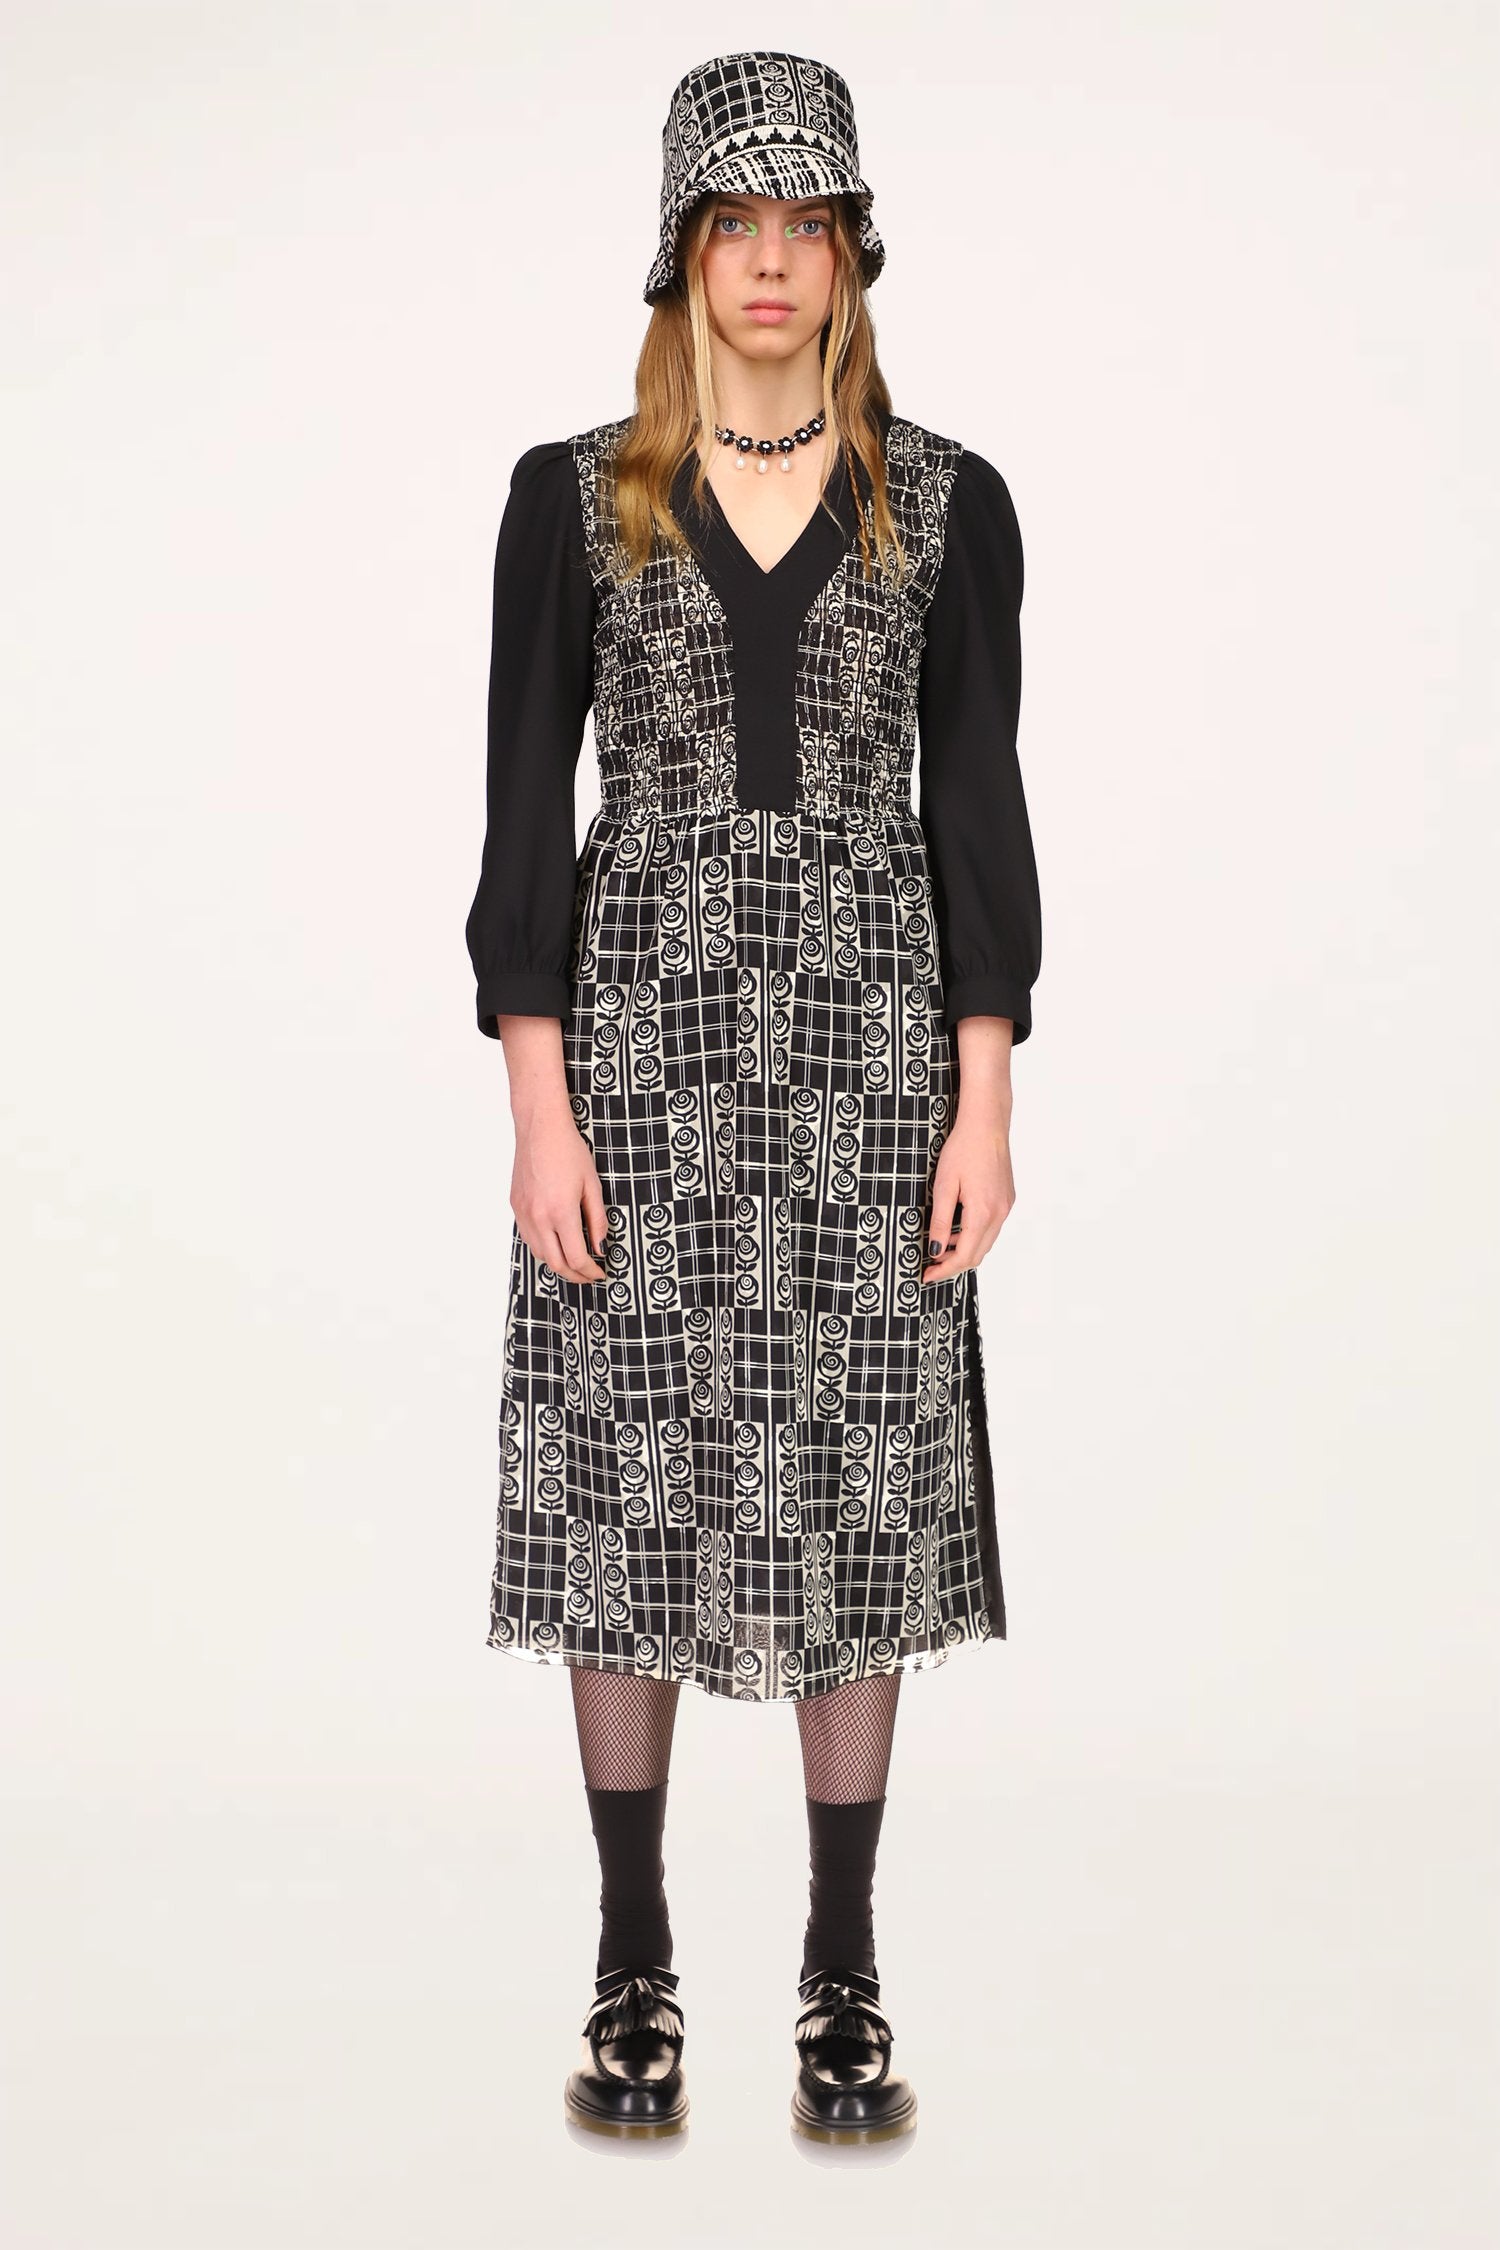 Rose Trellis Smocked Dress Black, mid-calf dress, V-collar cut with clack seams, long black sleeves